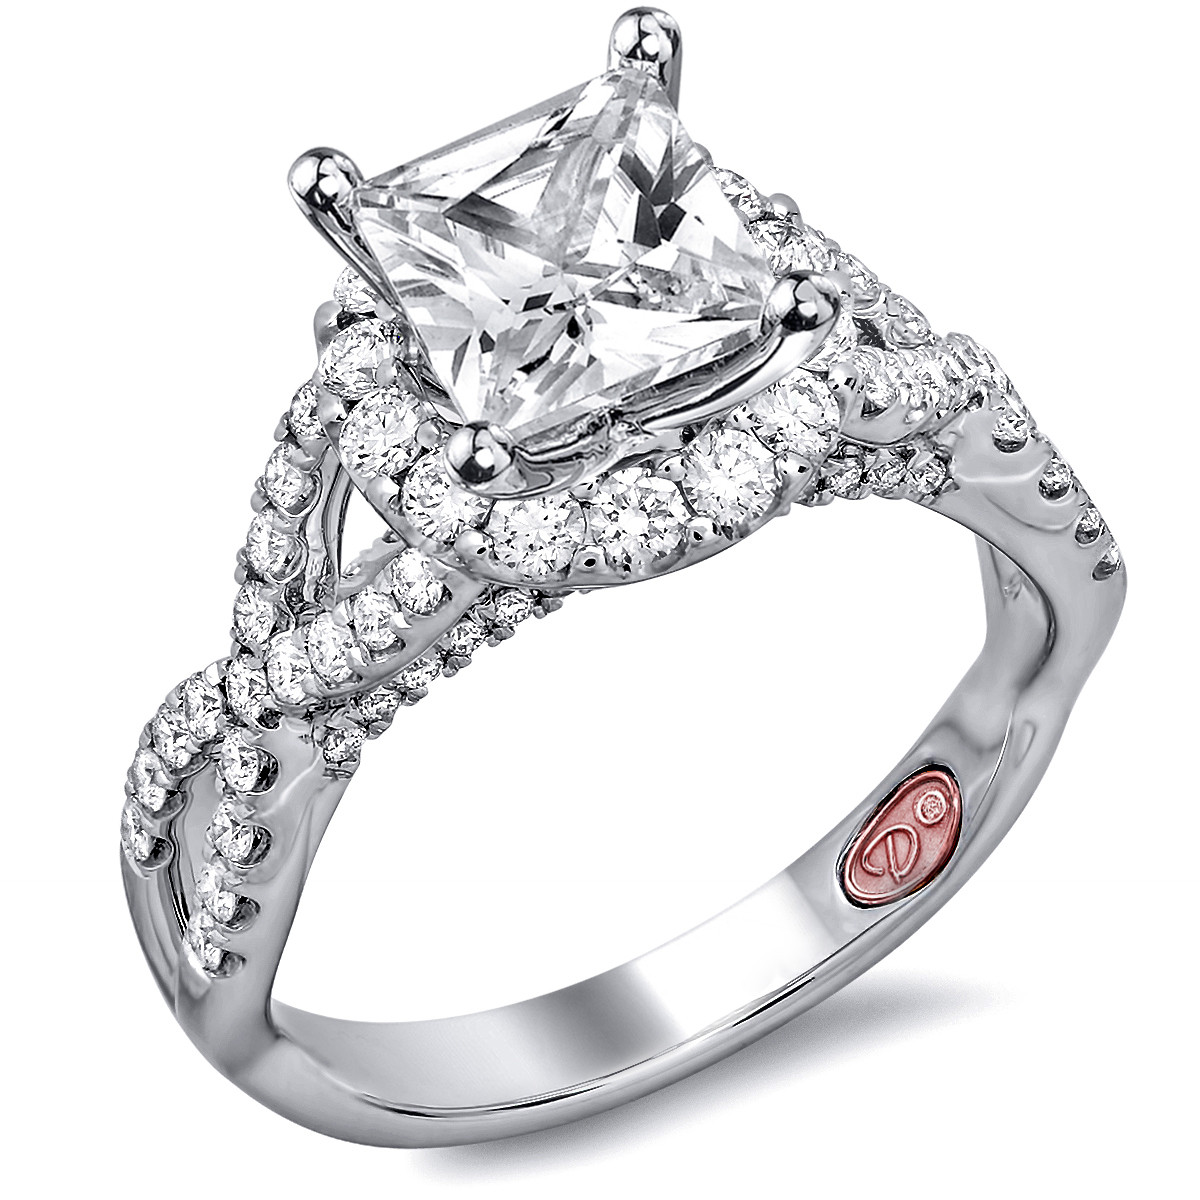 Princess Cut Wedding Rings
 Twisted Princess Cut Engagement Rings